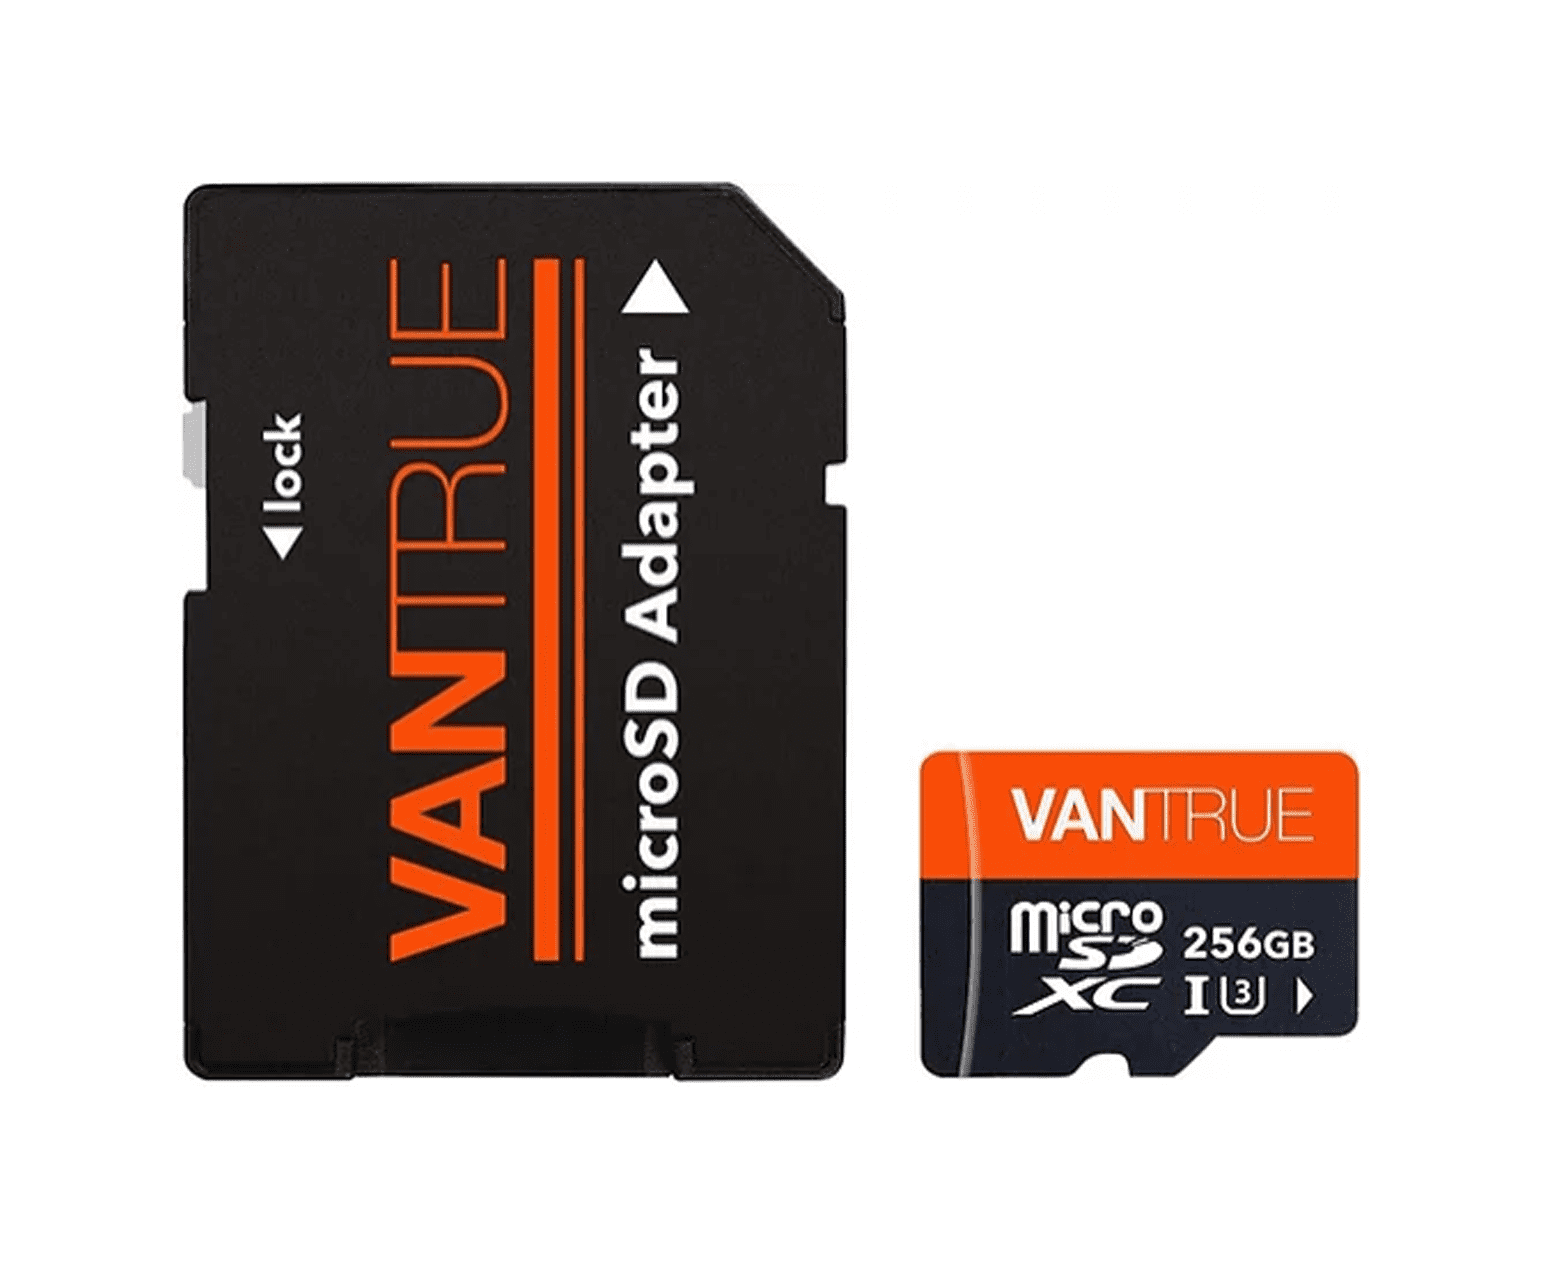 Vantrue SD card 